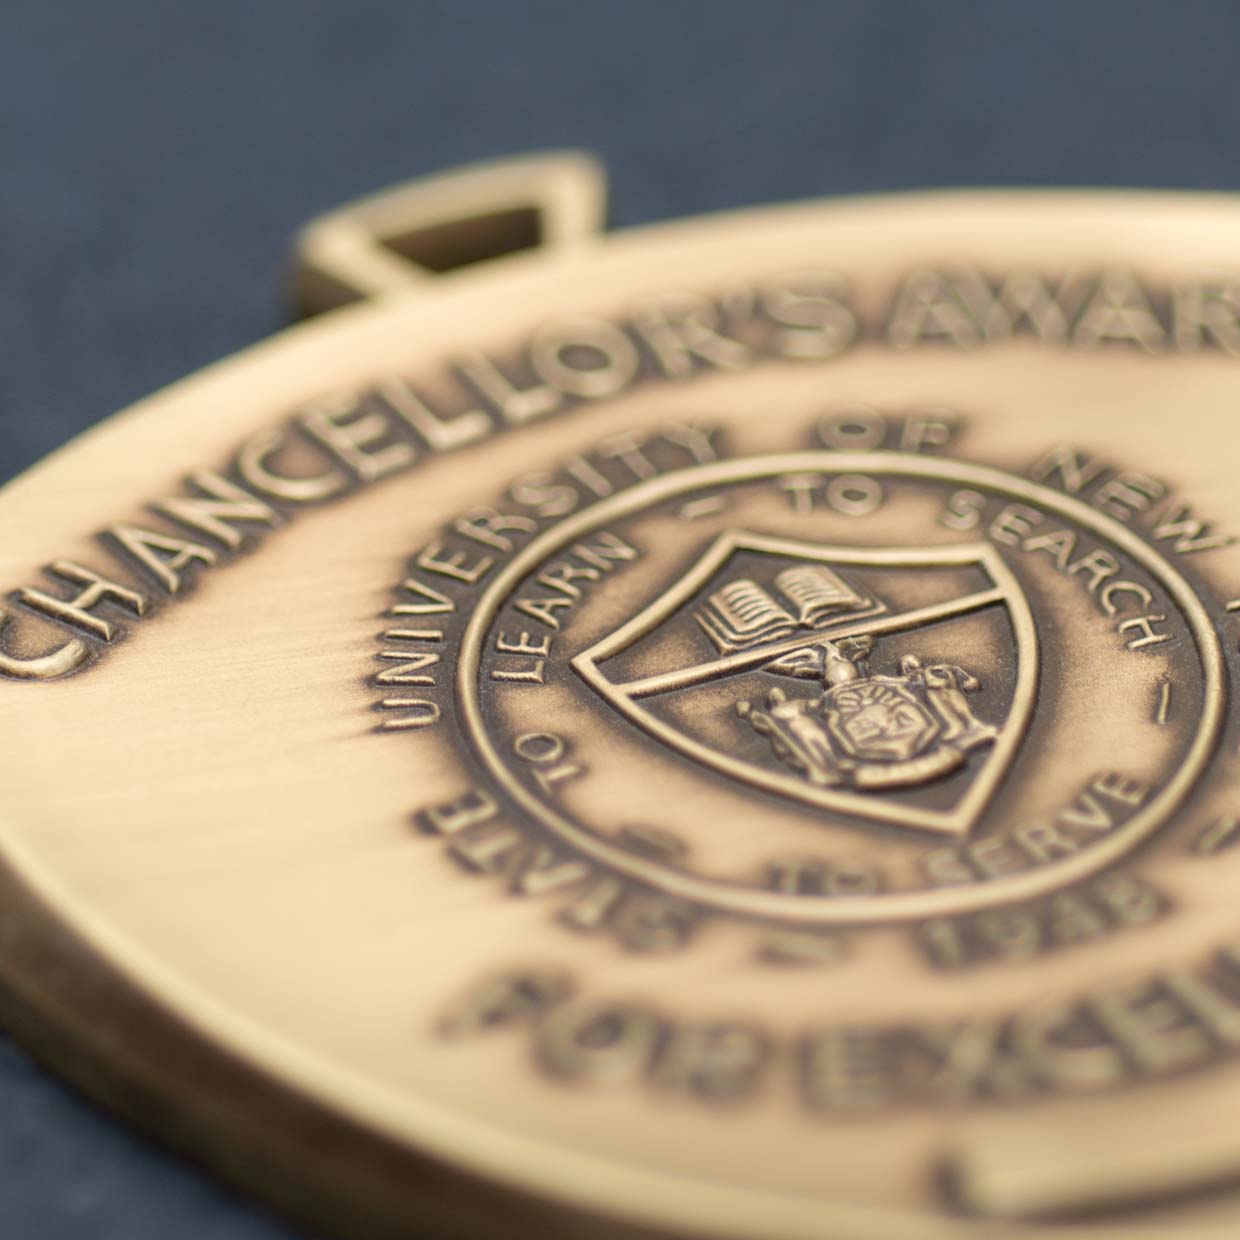 State University of New York Chancellor's Award Medal Detail